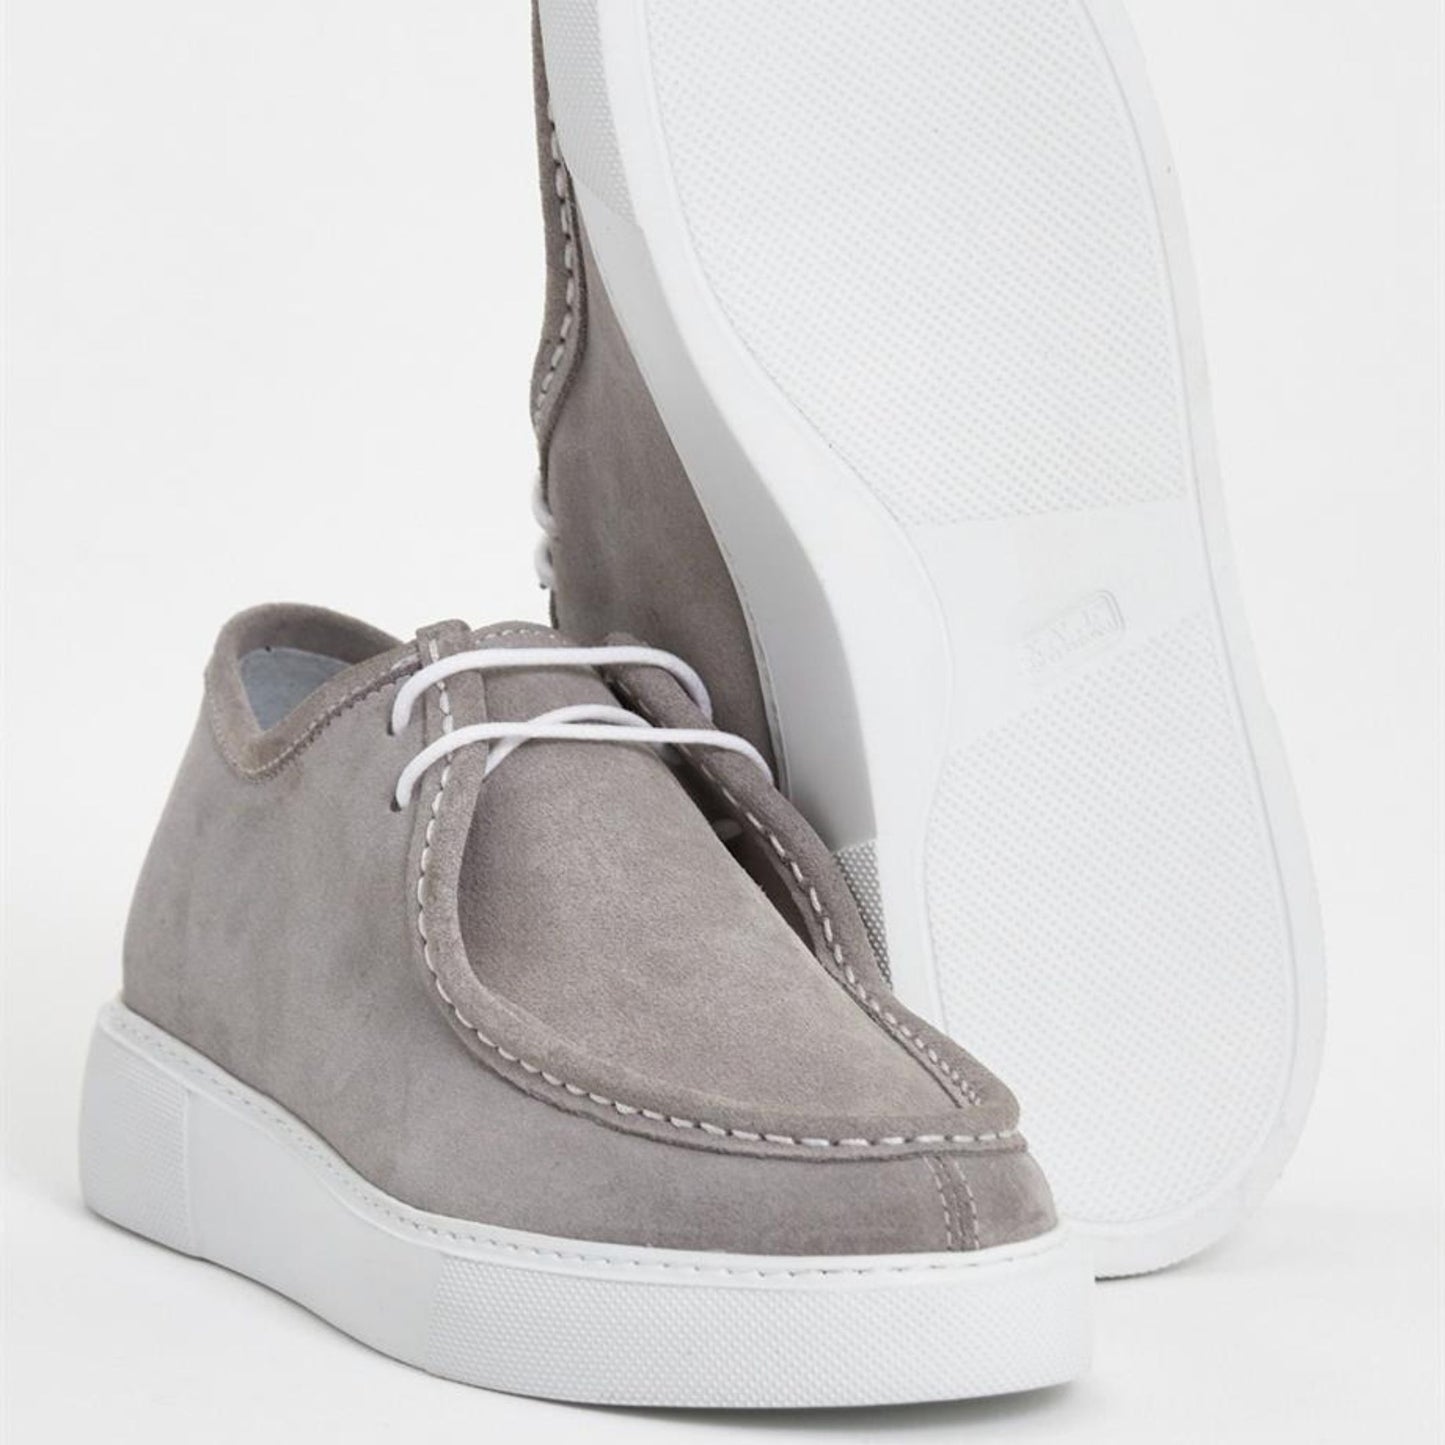 Madasat Grey Casual Shoes - 701 |